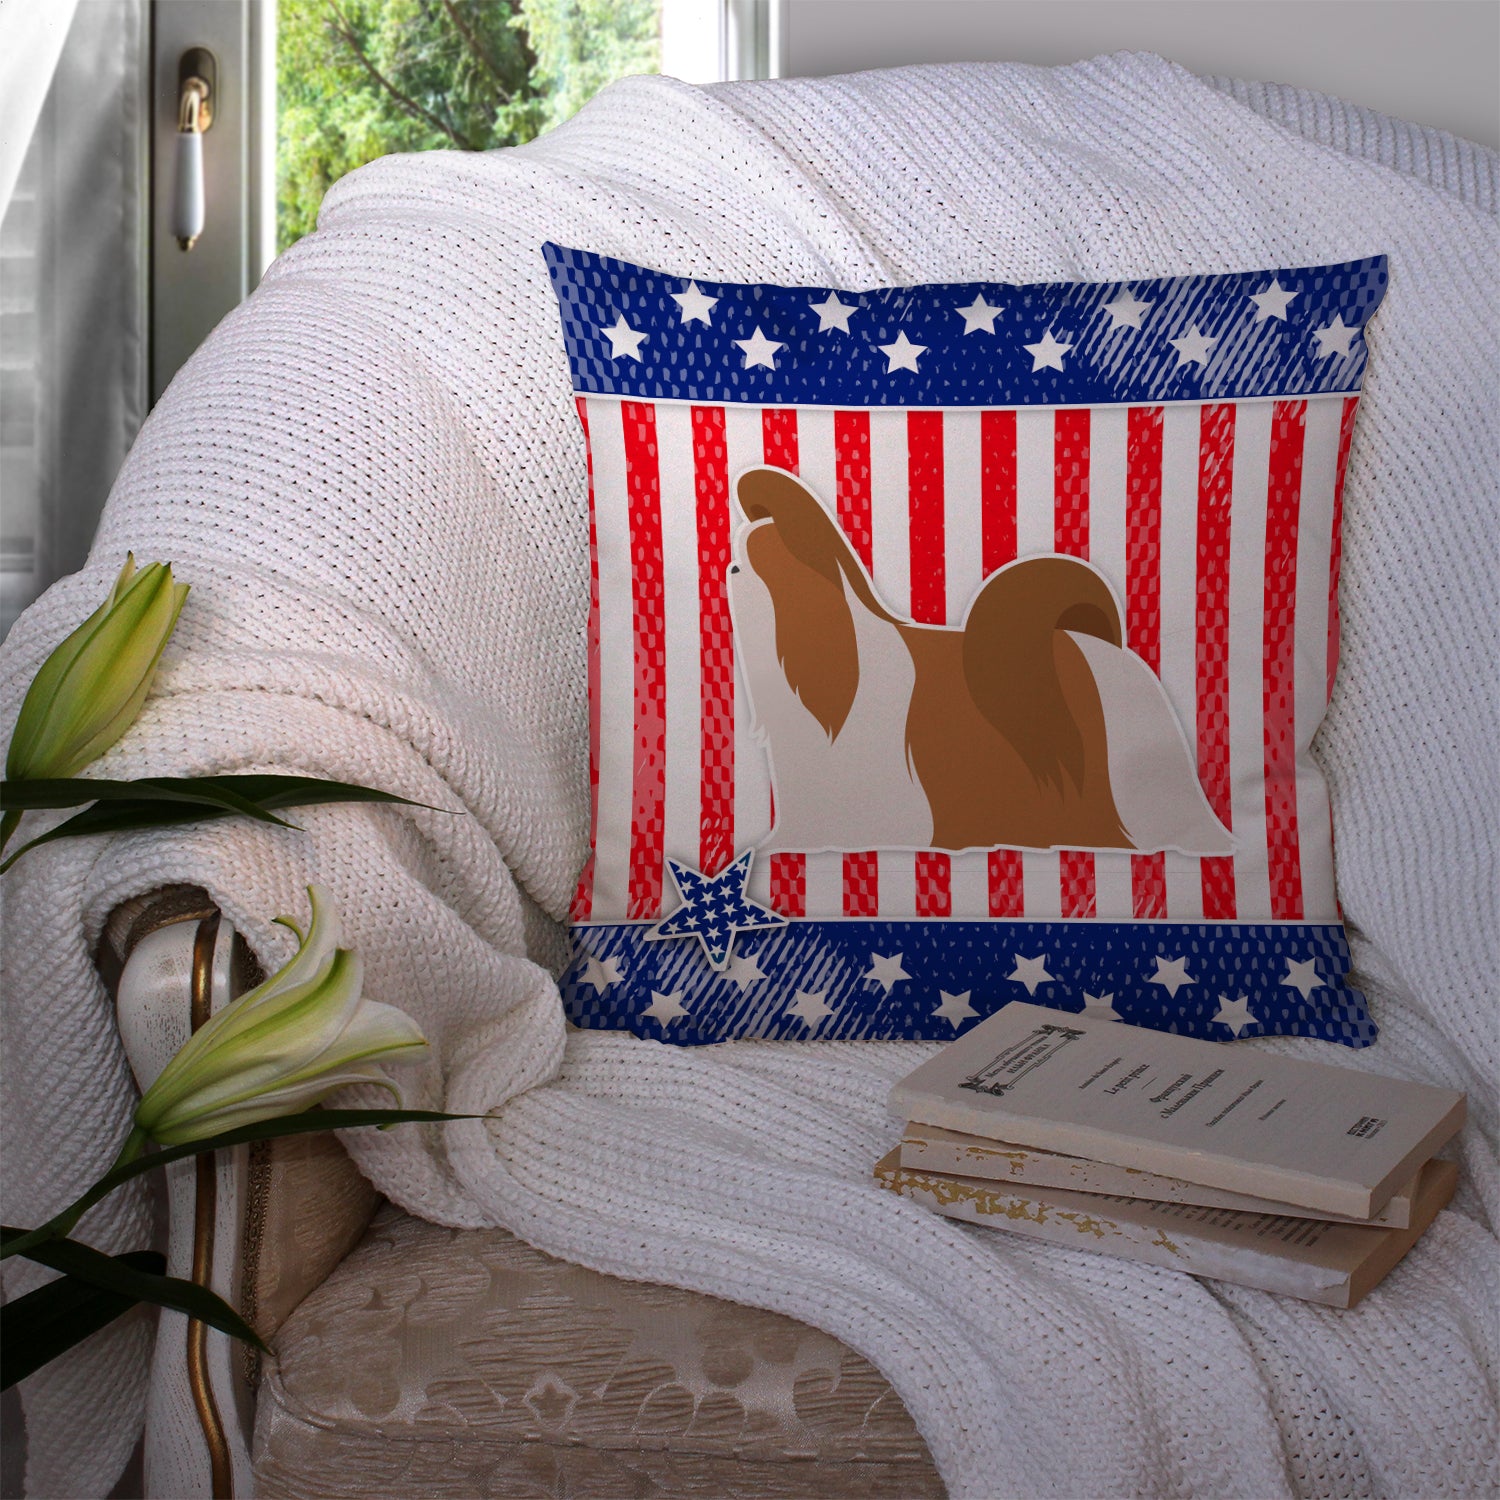 USA Patriotic Shih Tzu Fabric Decorative Pillow BB3346PW1414 - the-store.com